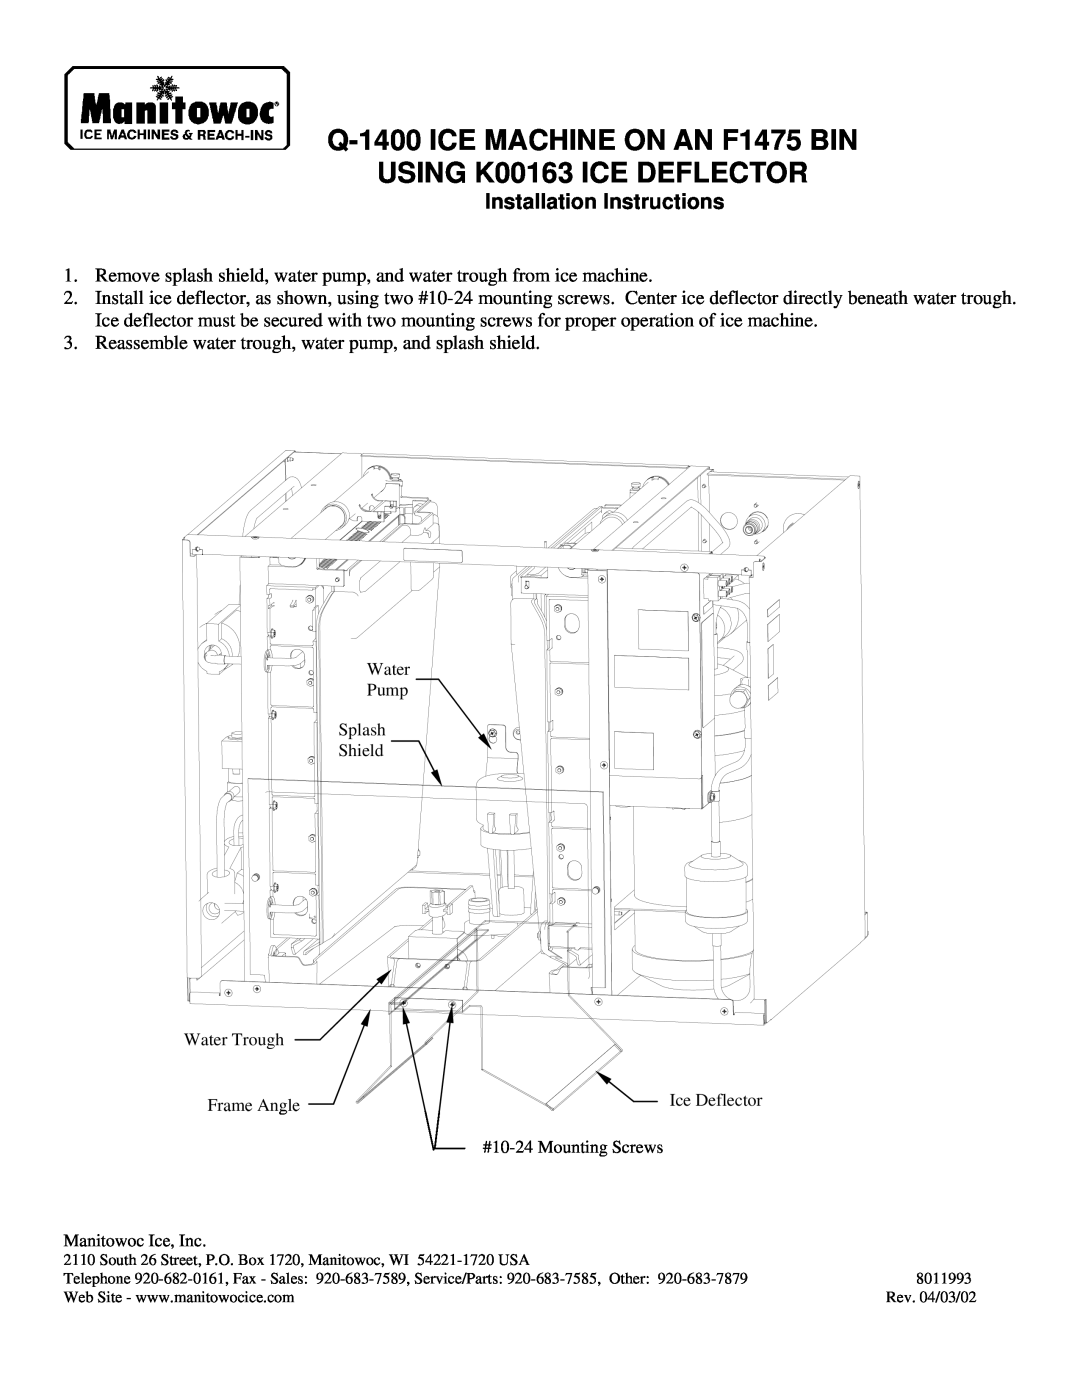 Manitowoc Ice installation instructions Q-1400ICE MACHINE ON AN F1475 BIN, USING K00163 ICE DEFLECTOR 